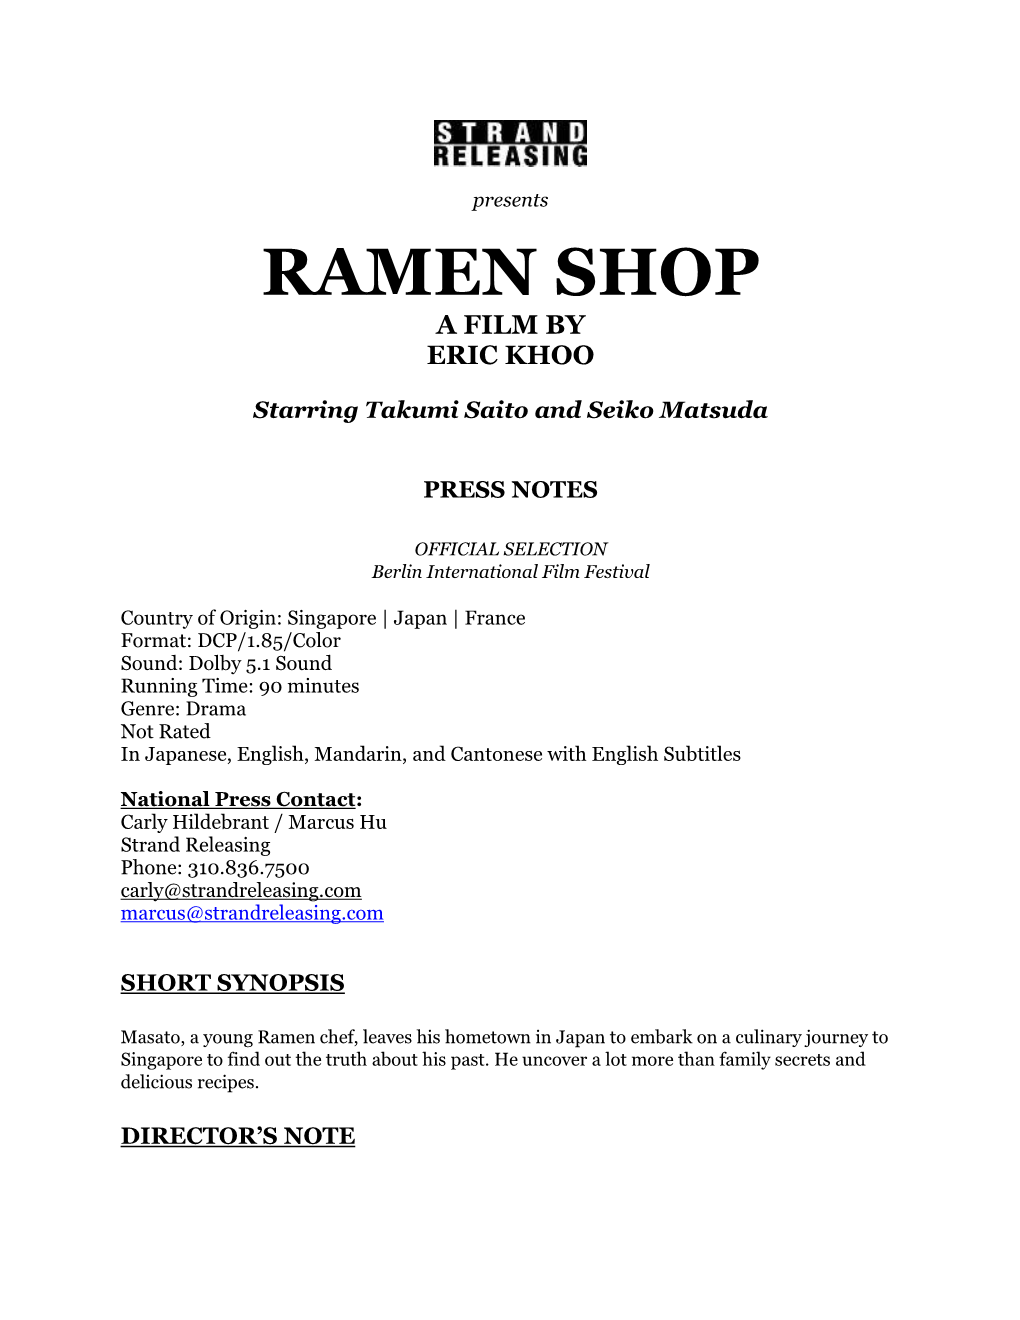 Ramen Shop a Film by Eric Khoo